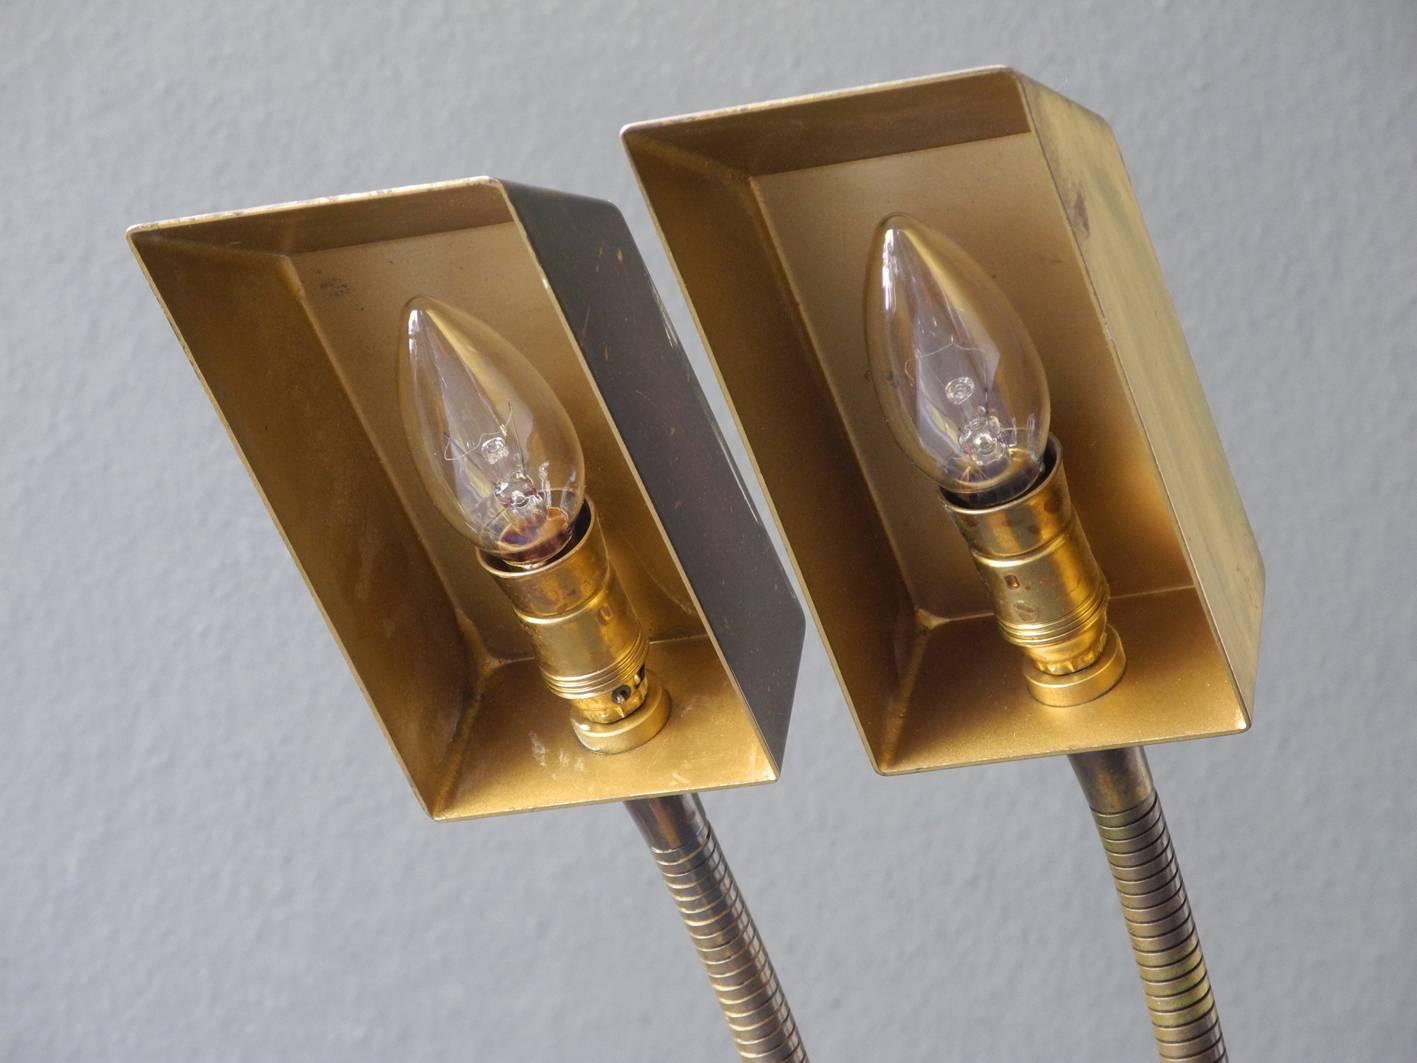 Pair of Extra Large Brass Table Lamps, Vereinigte Werkstätten 1